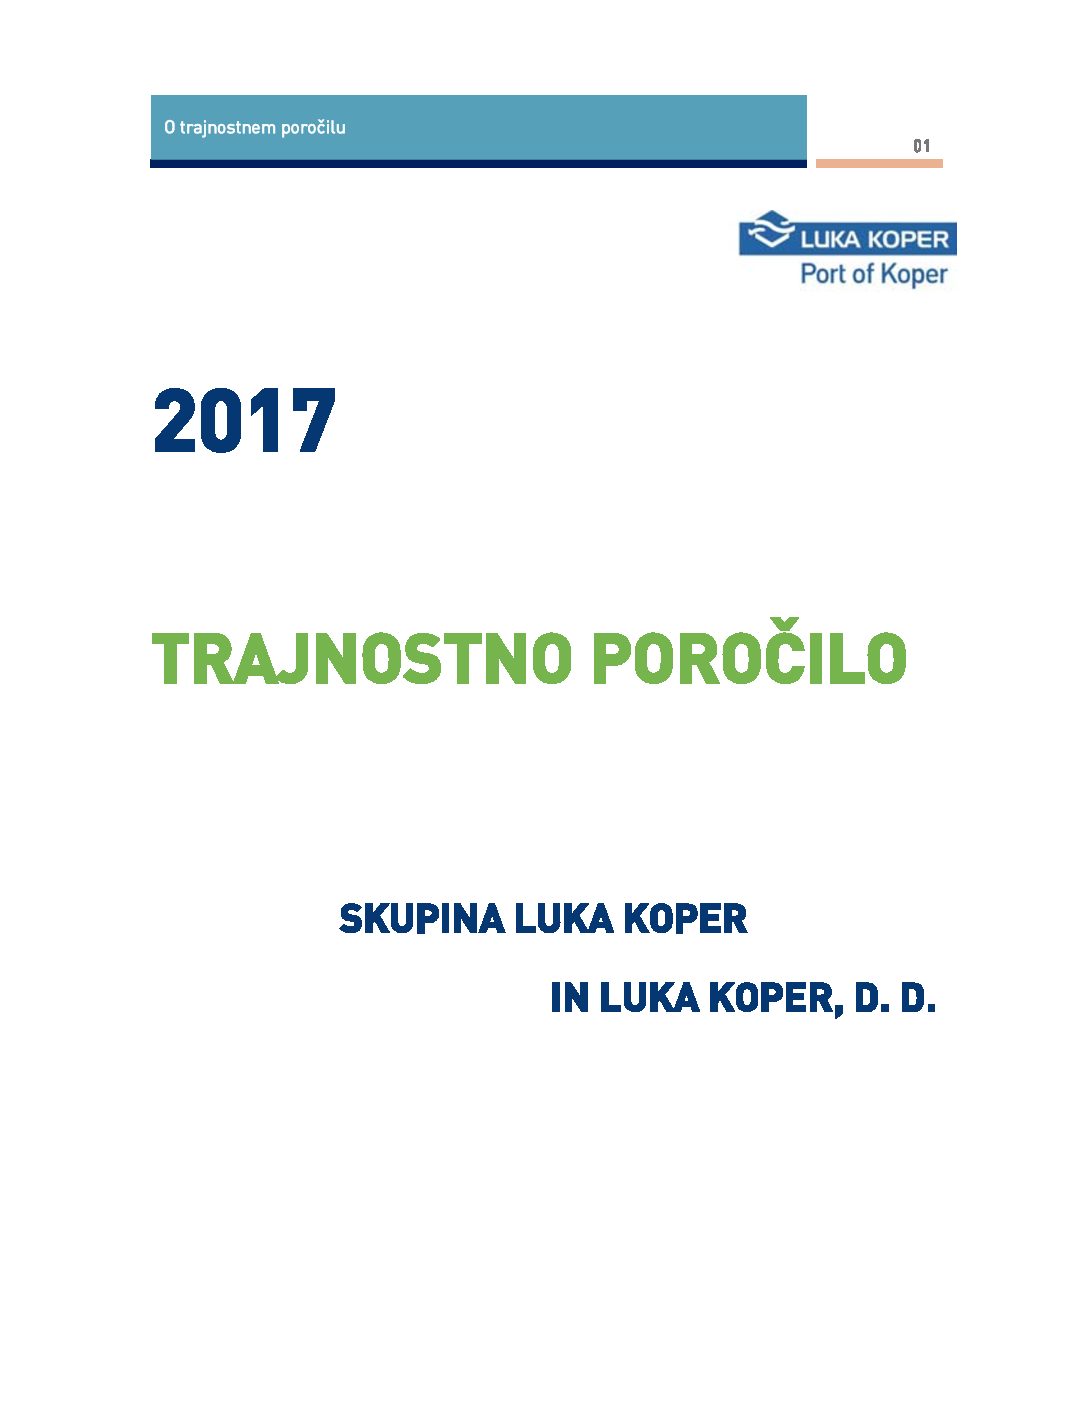 Trajnostno porocilo Luka Koper 2017 pdf